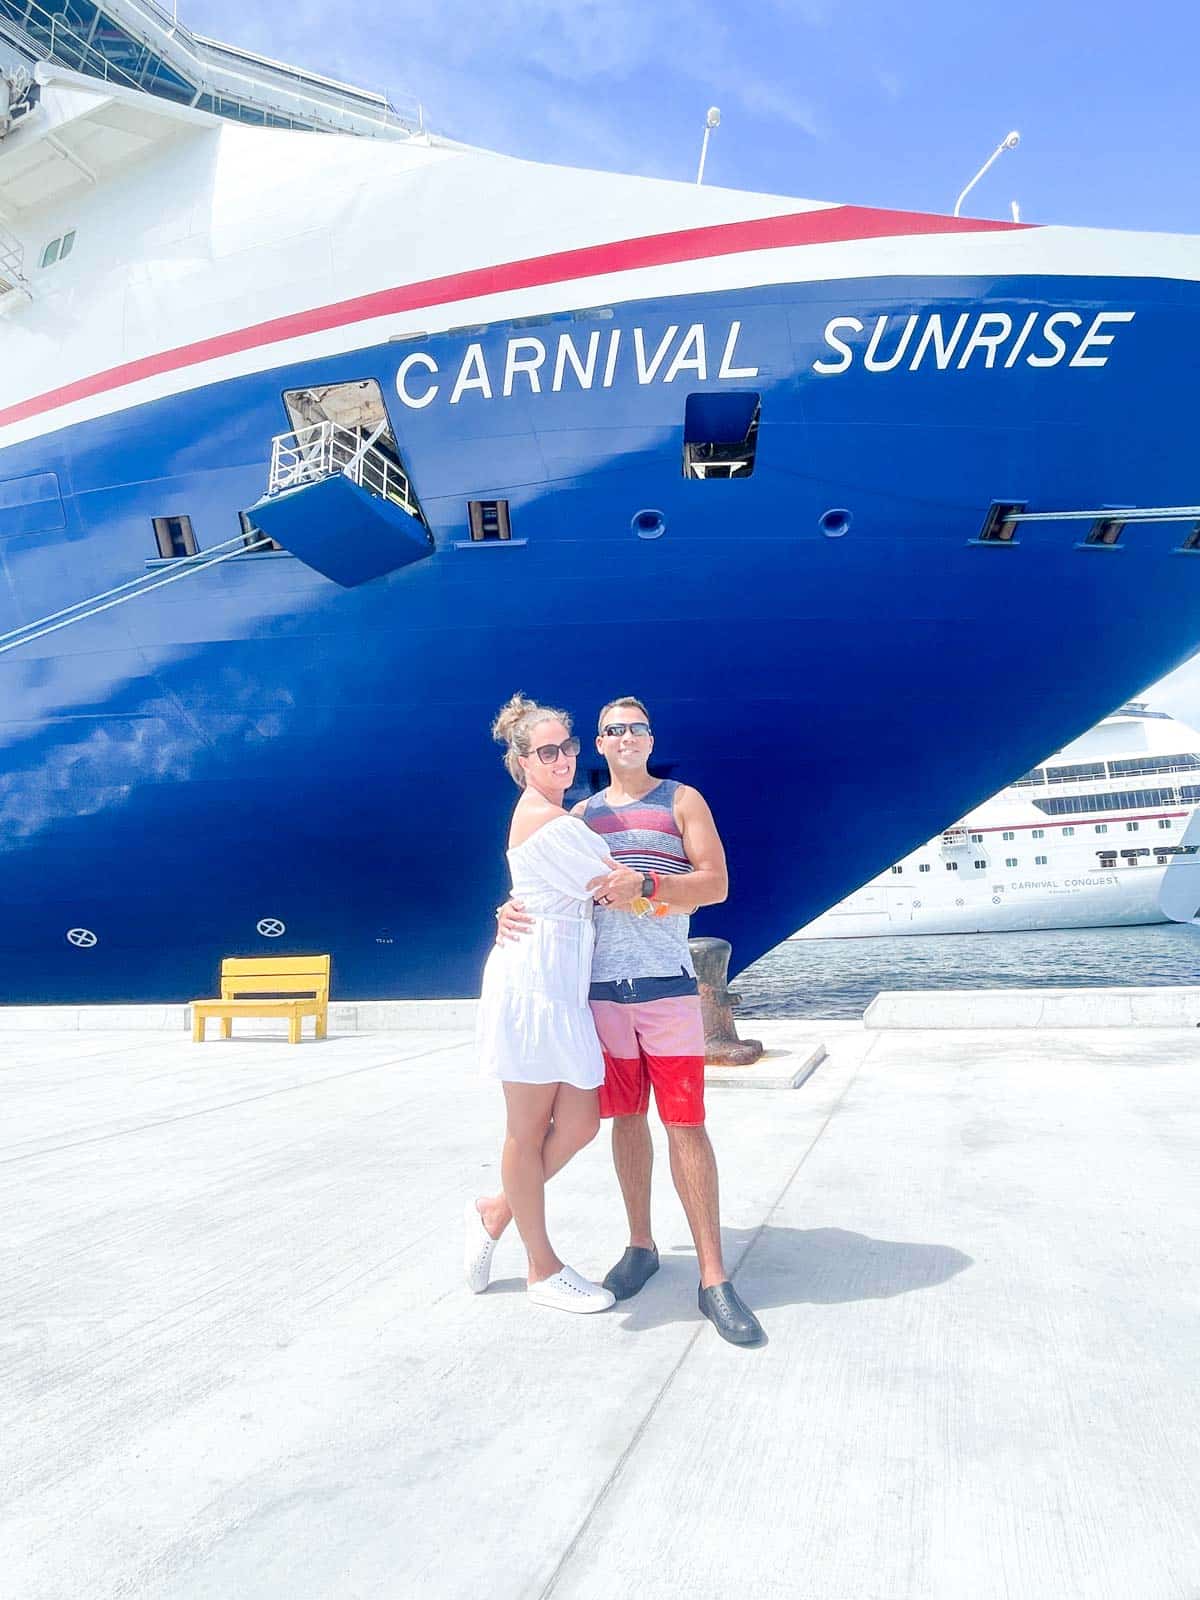 Our 5-Day Carnival Sunrise Caribbean Cruise